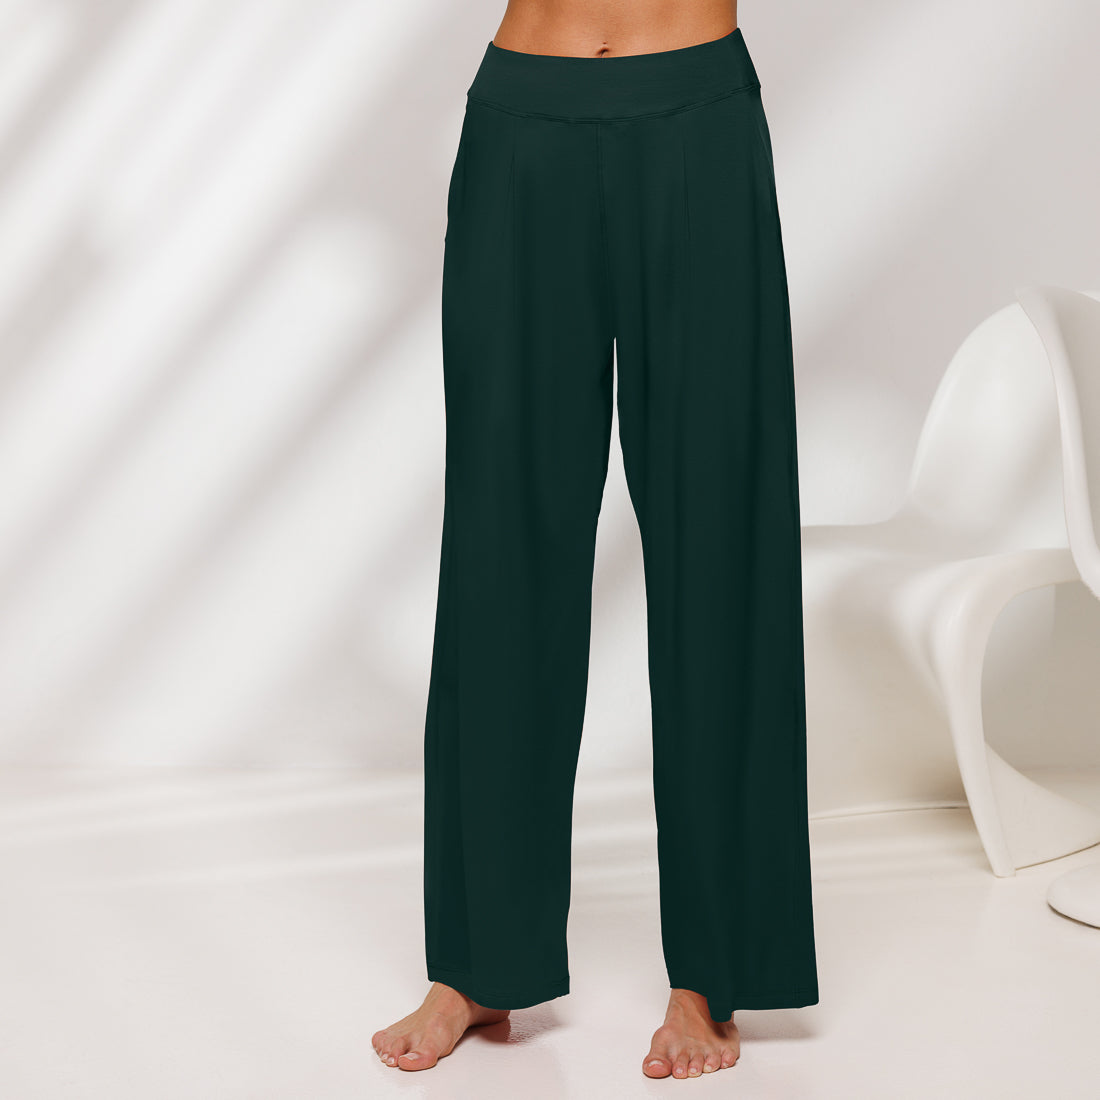 Women's cooling pajamas pants || Rainforest